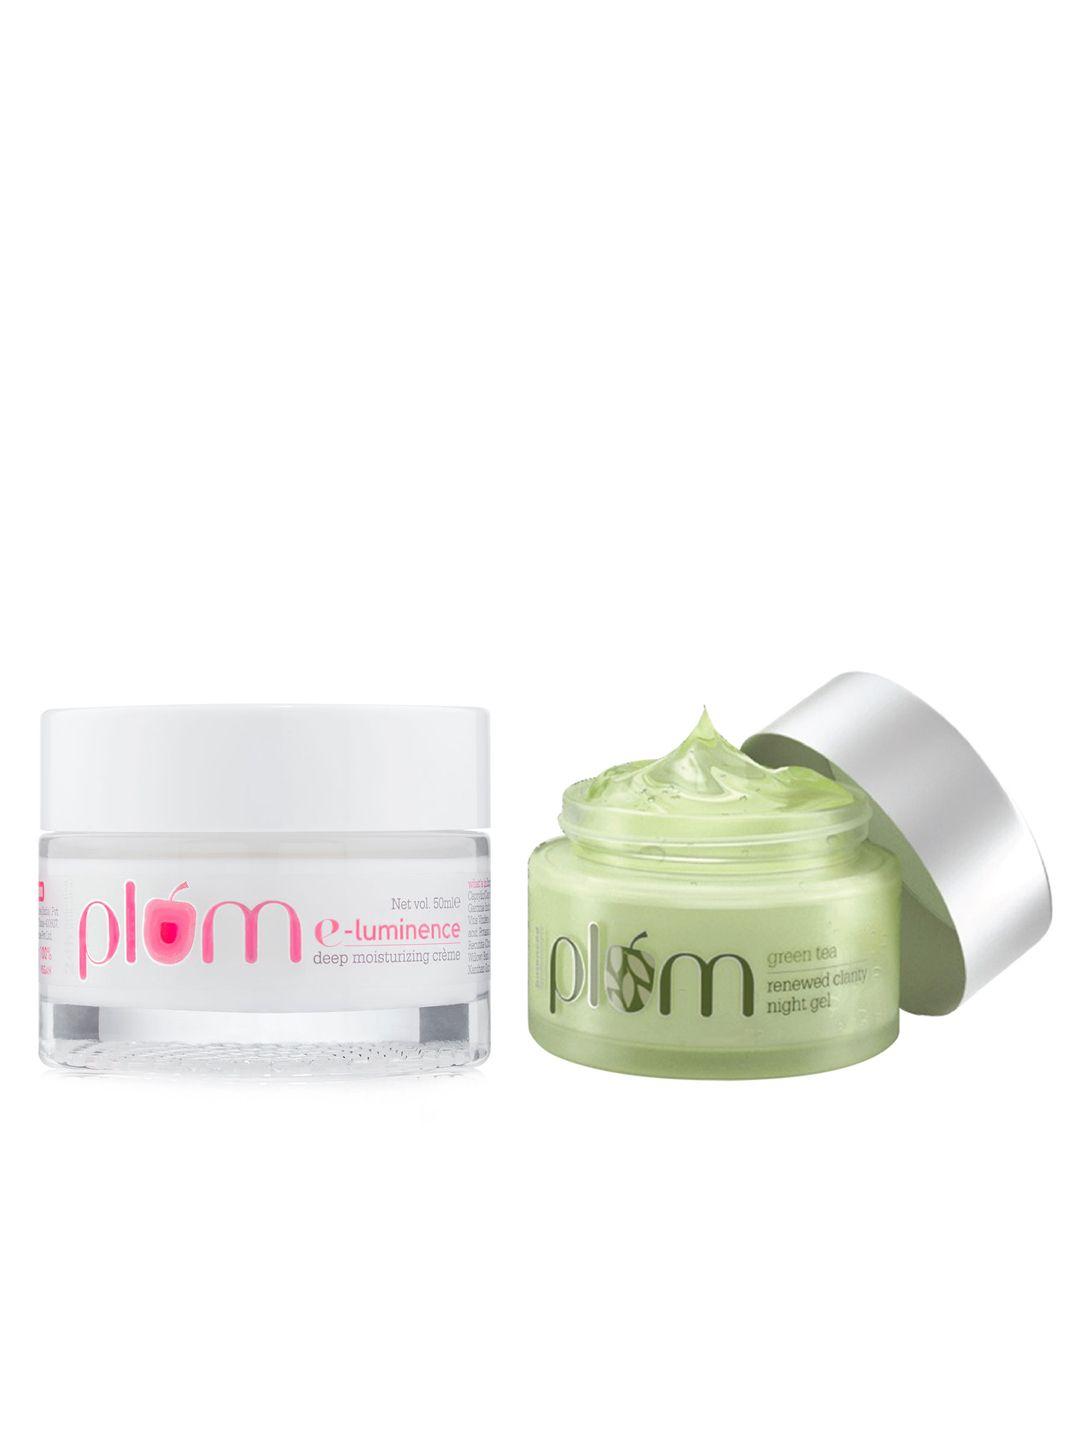 plum deep moisturising sustainable creme & night gel